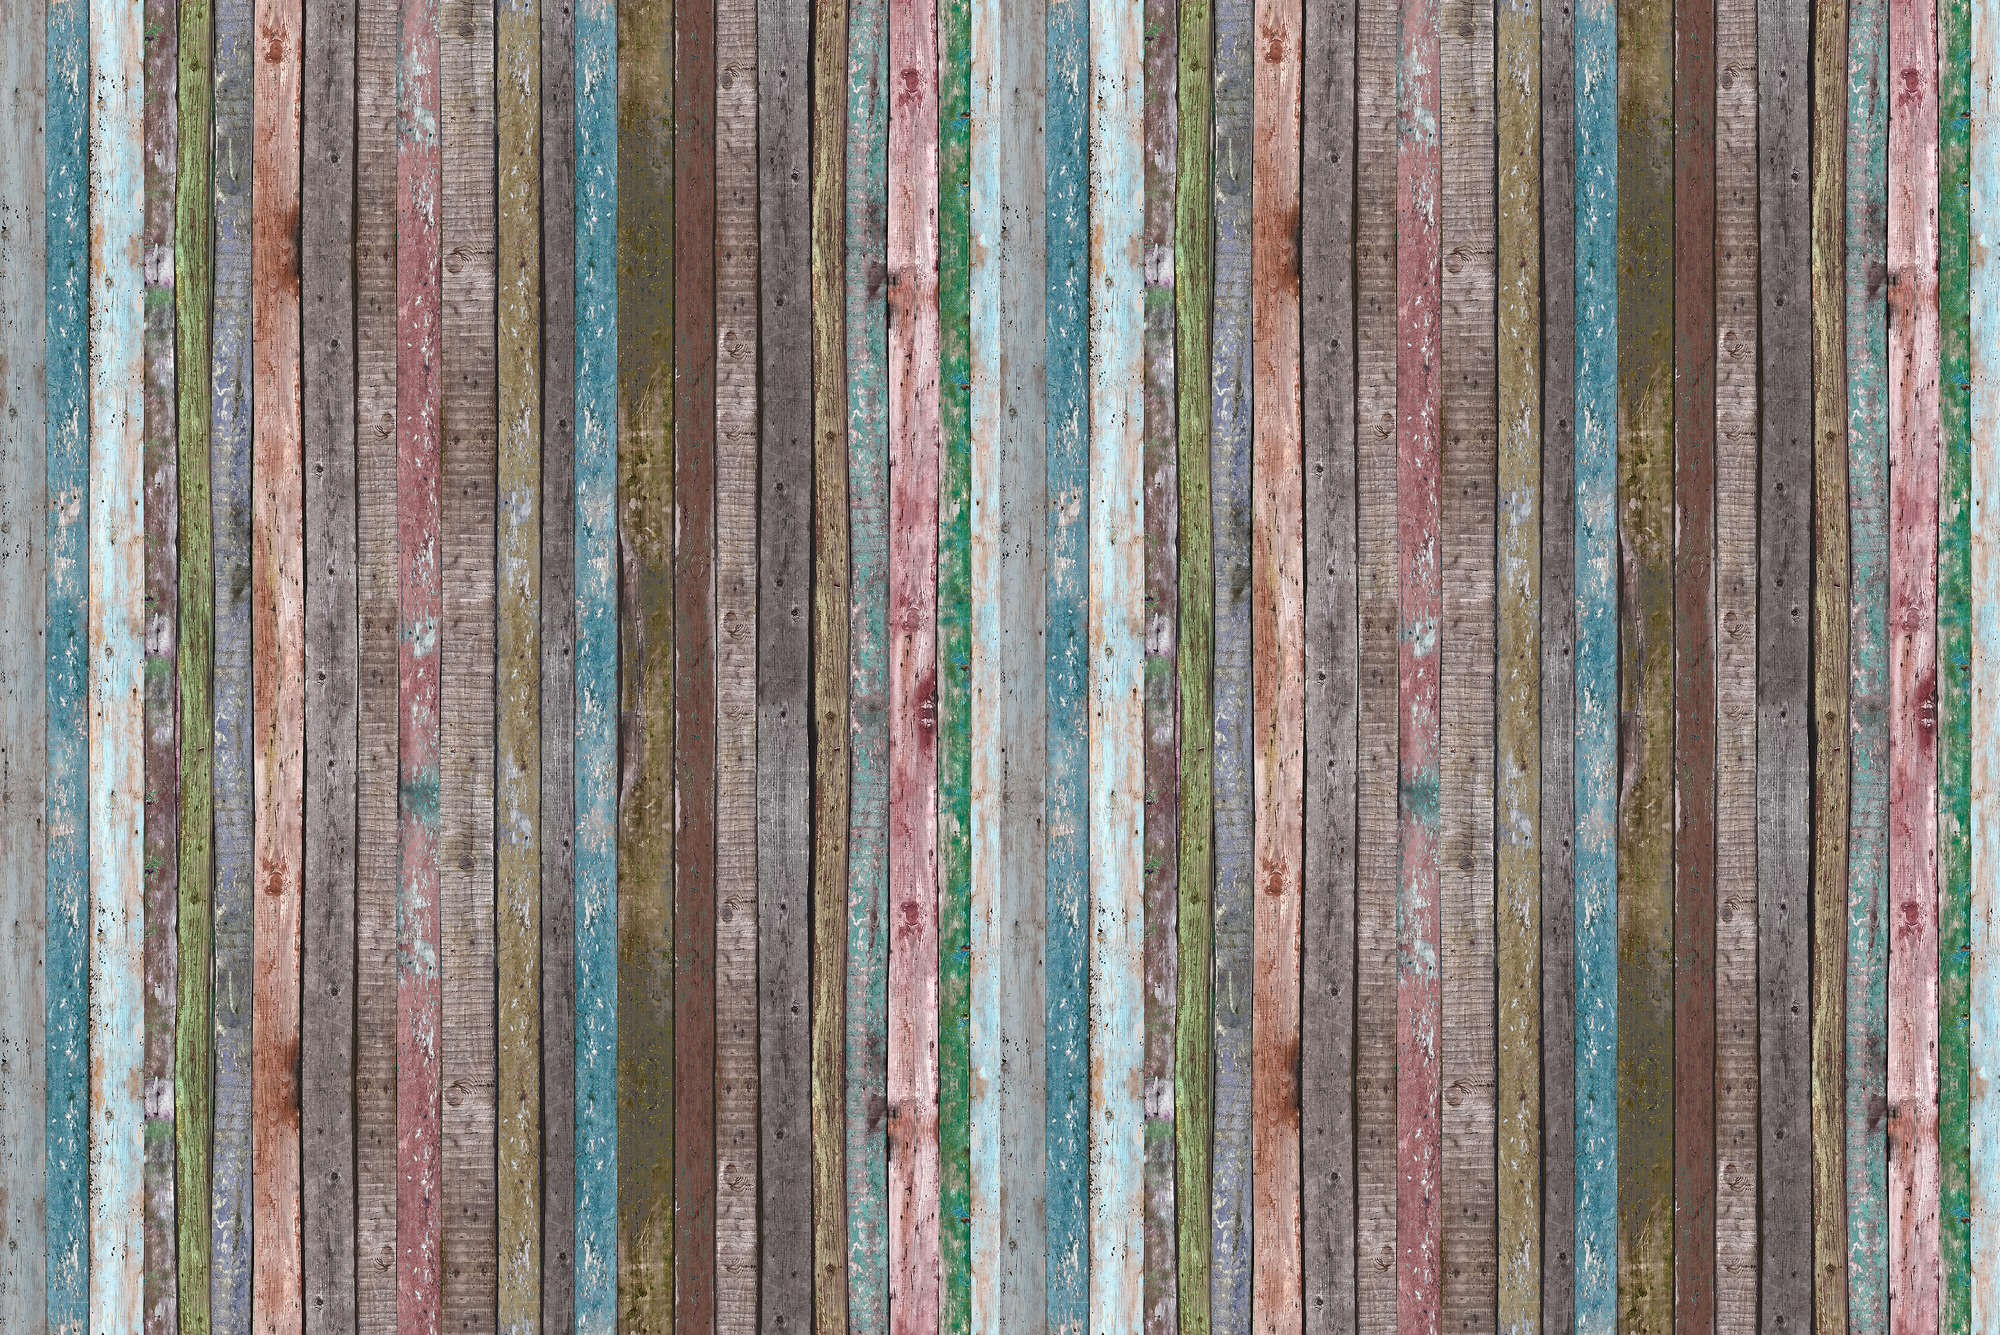             Holz Fototapete Zaun aus Brettern braun türkis auf Matt Glattvlies
        